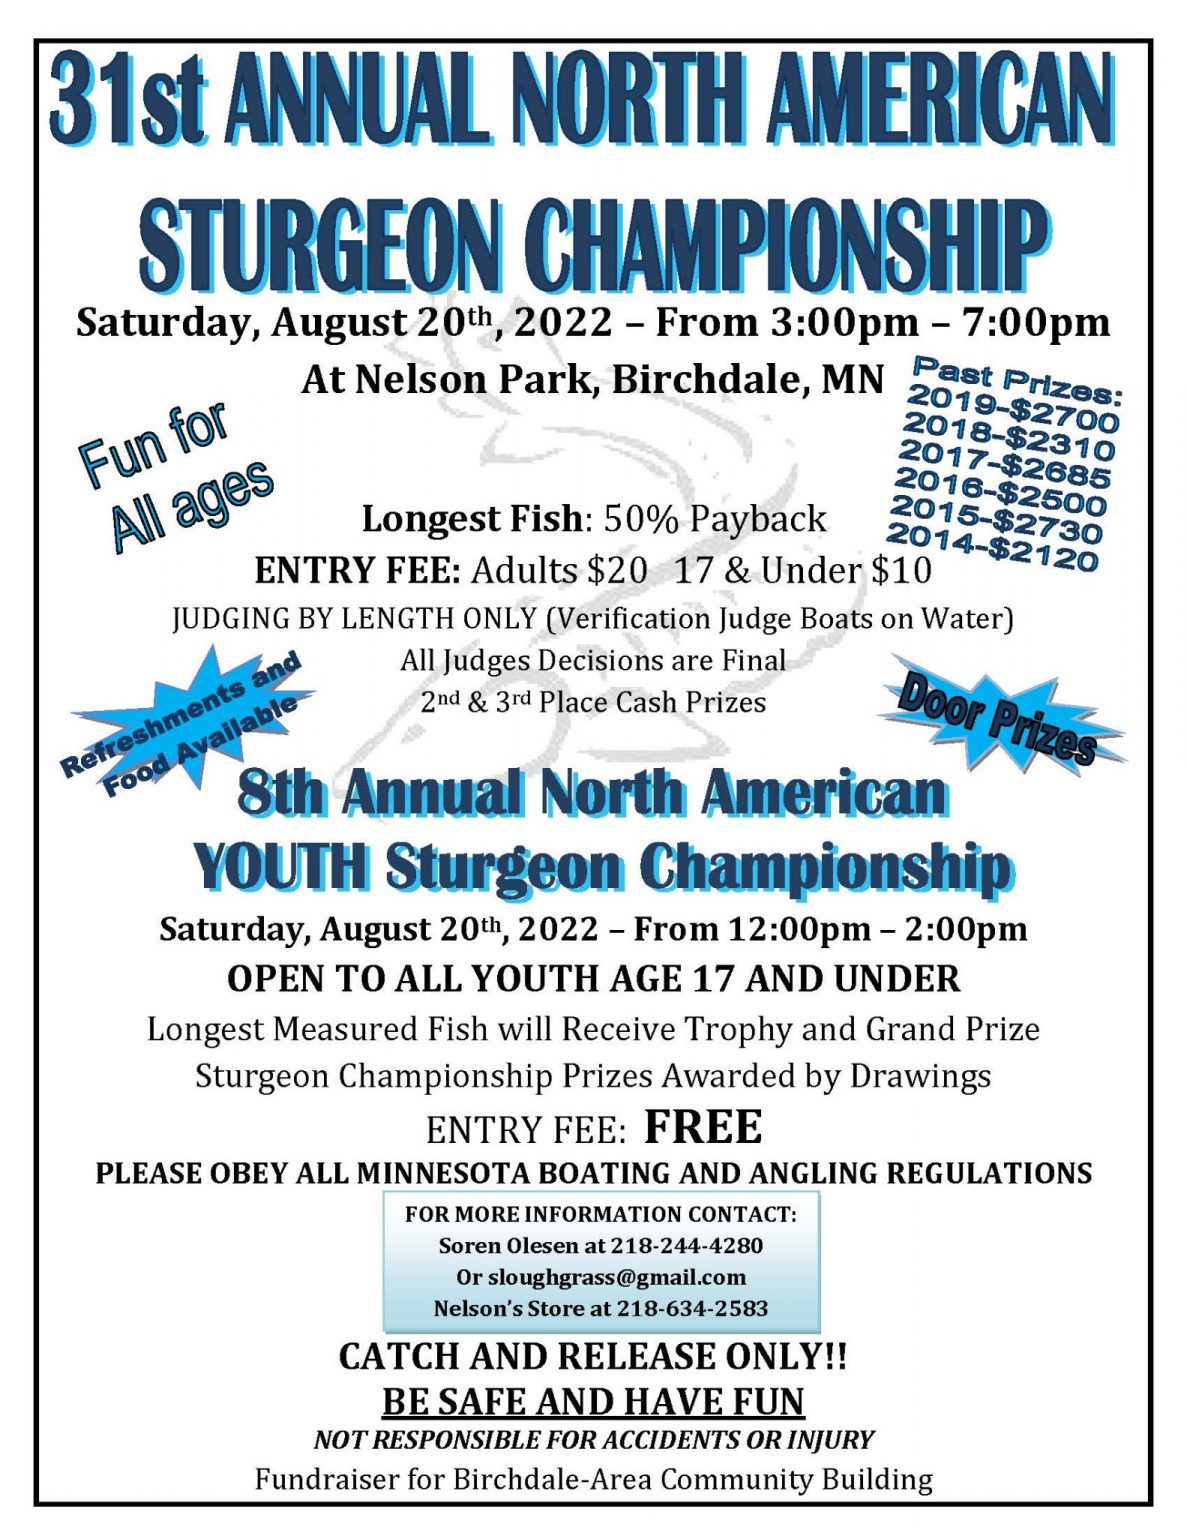 31st Annual North American Sturgeon Championship... Open to the Public